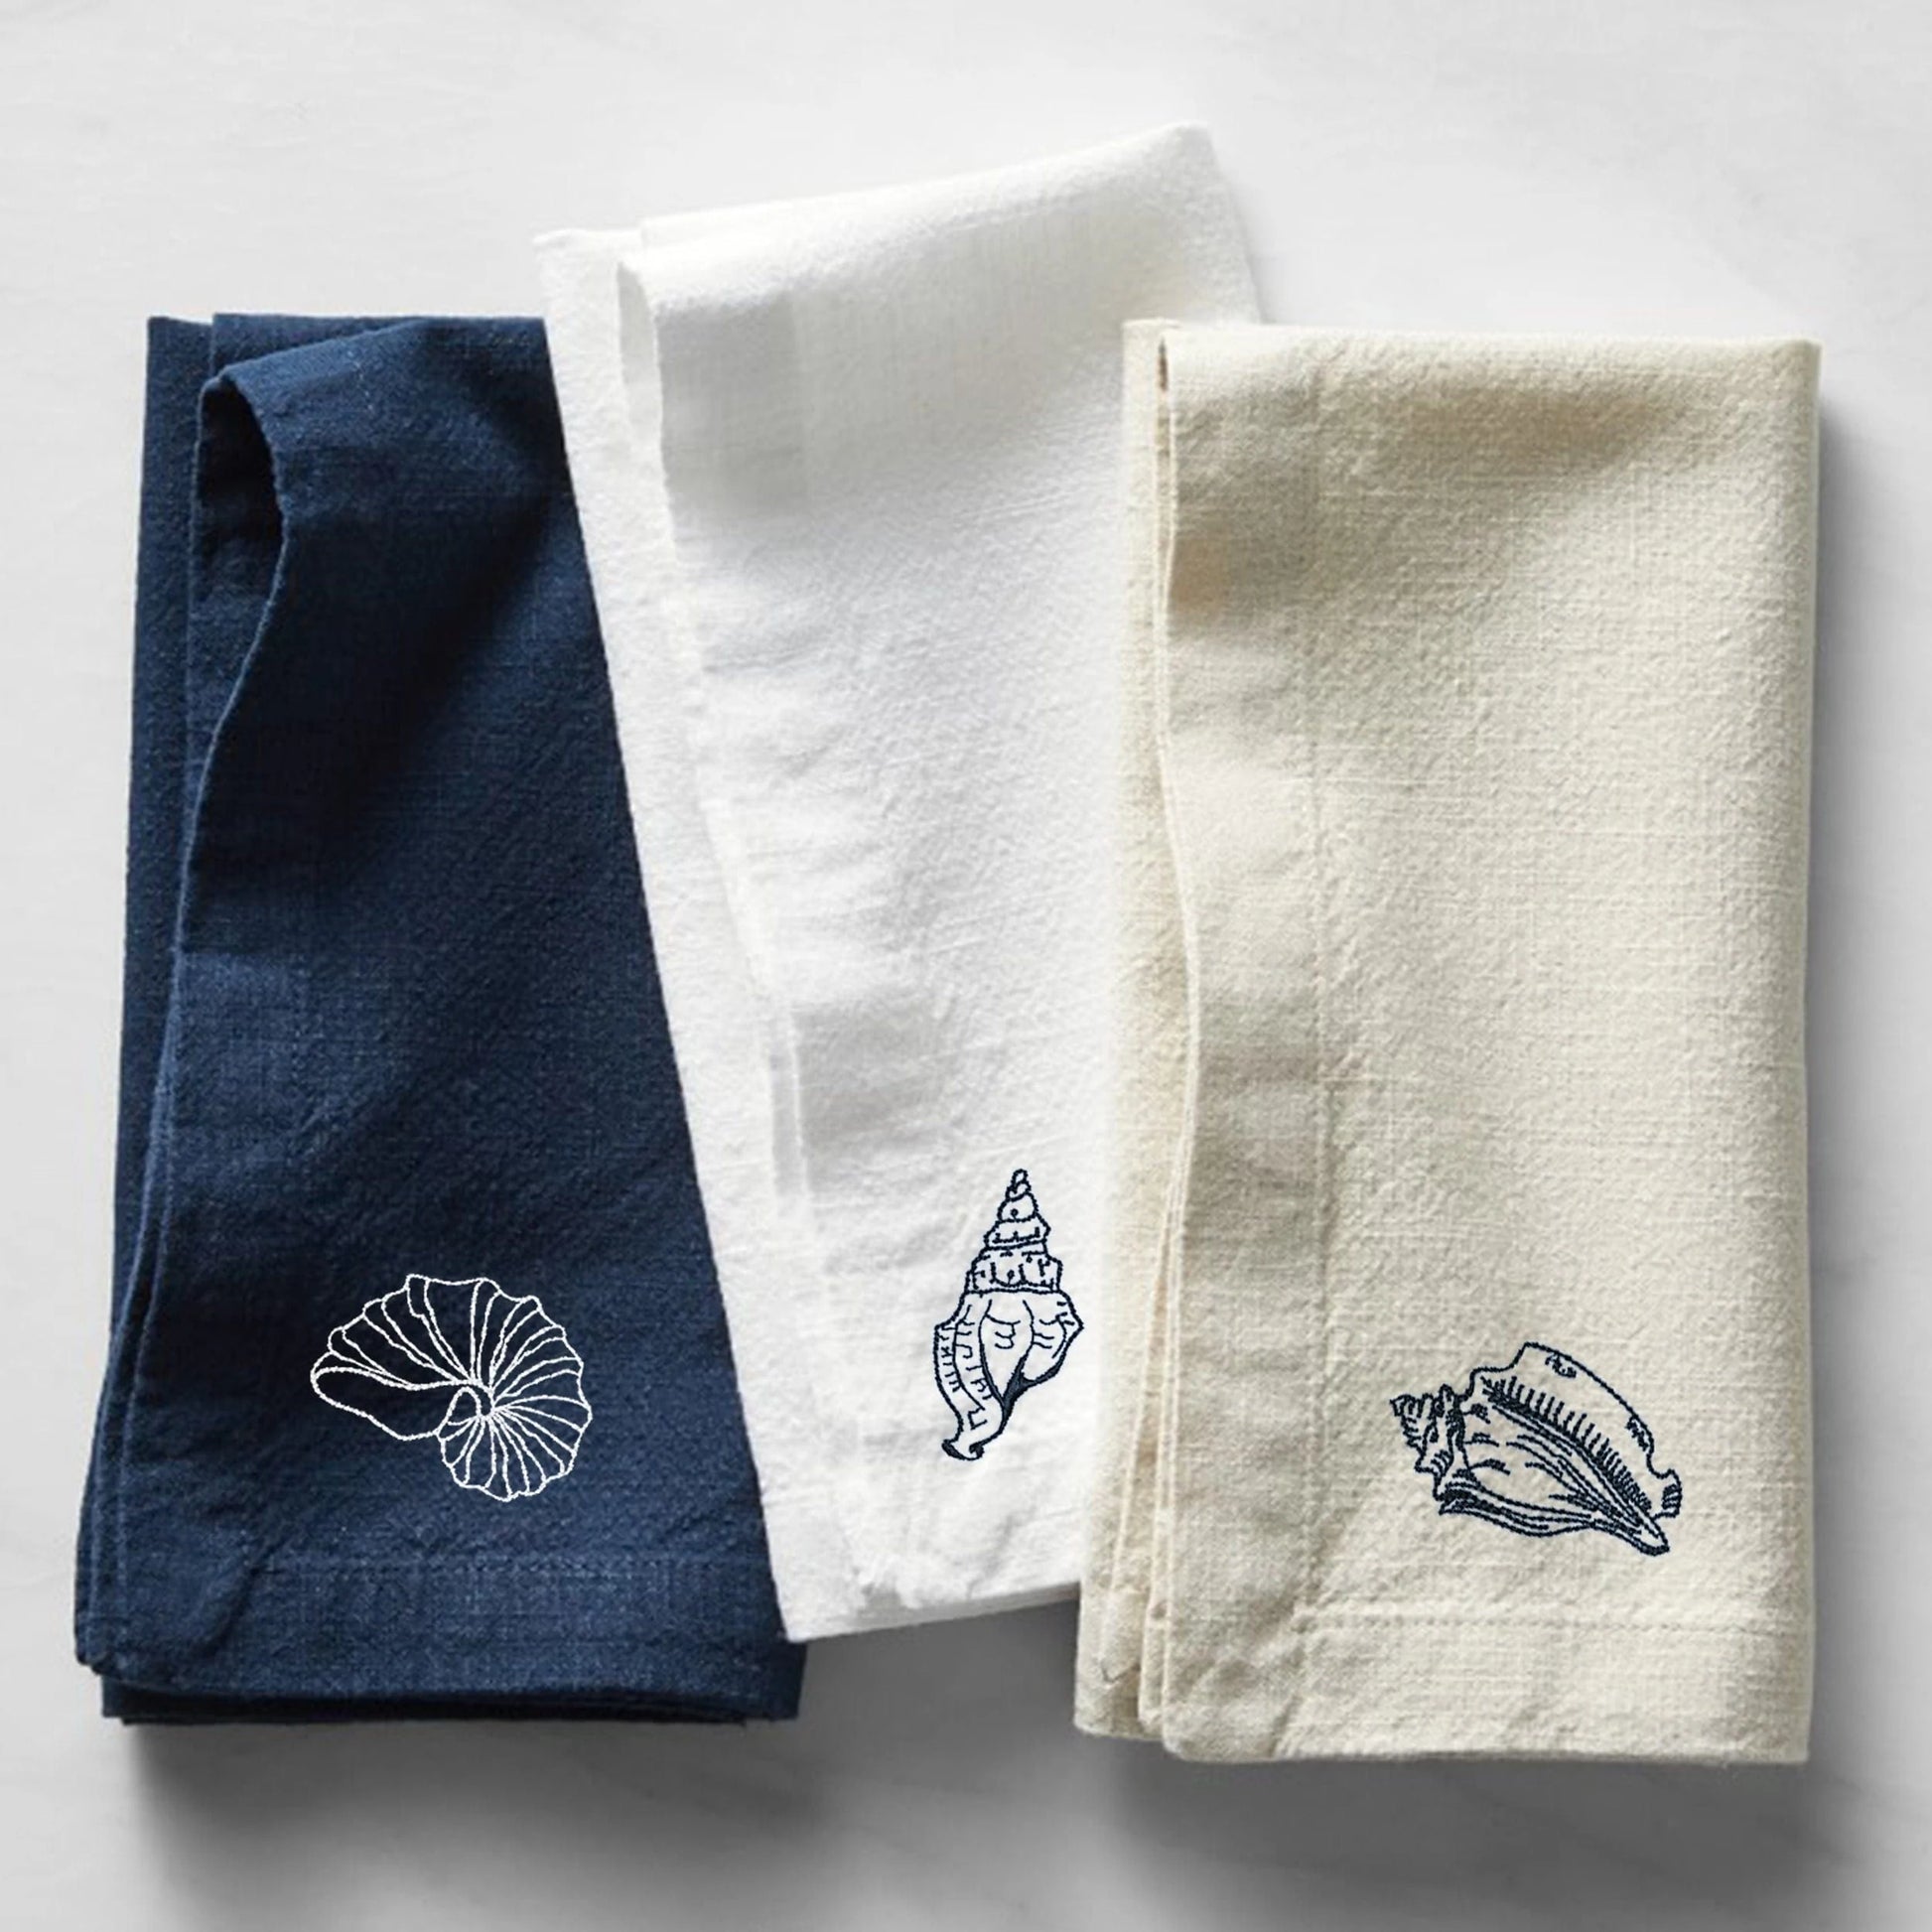 Marine sea shell machine embroidery design on towels